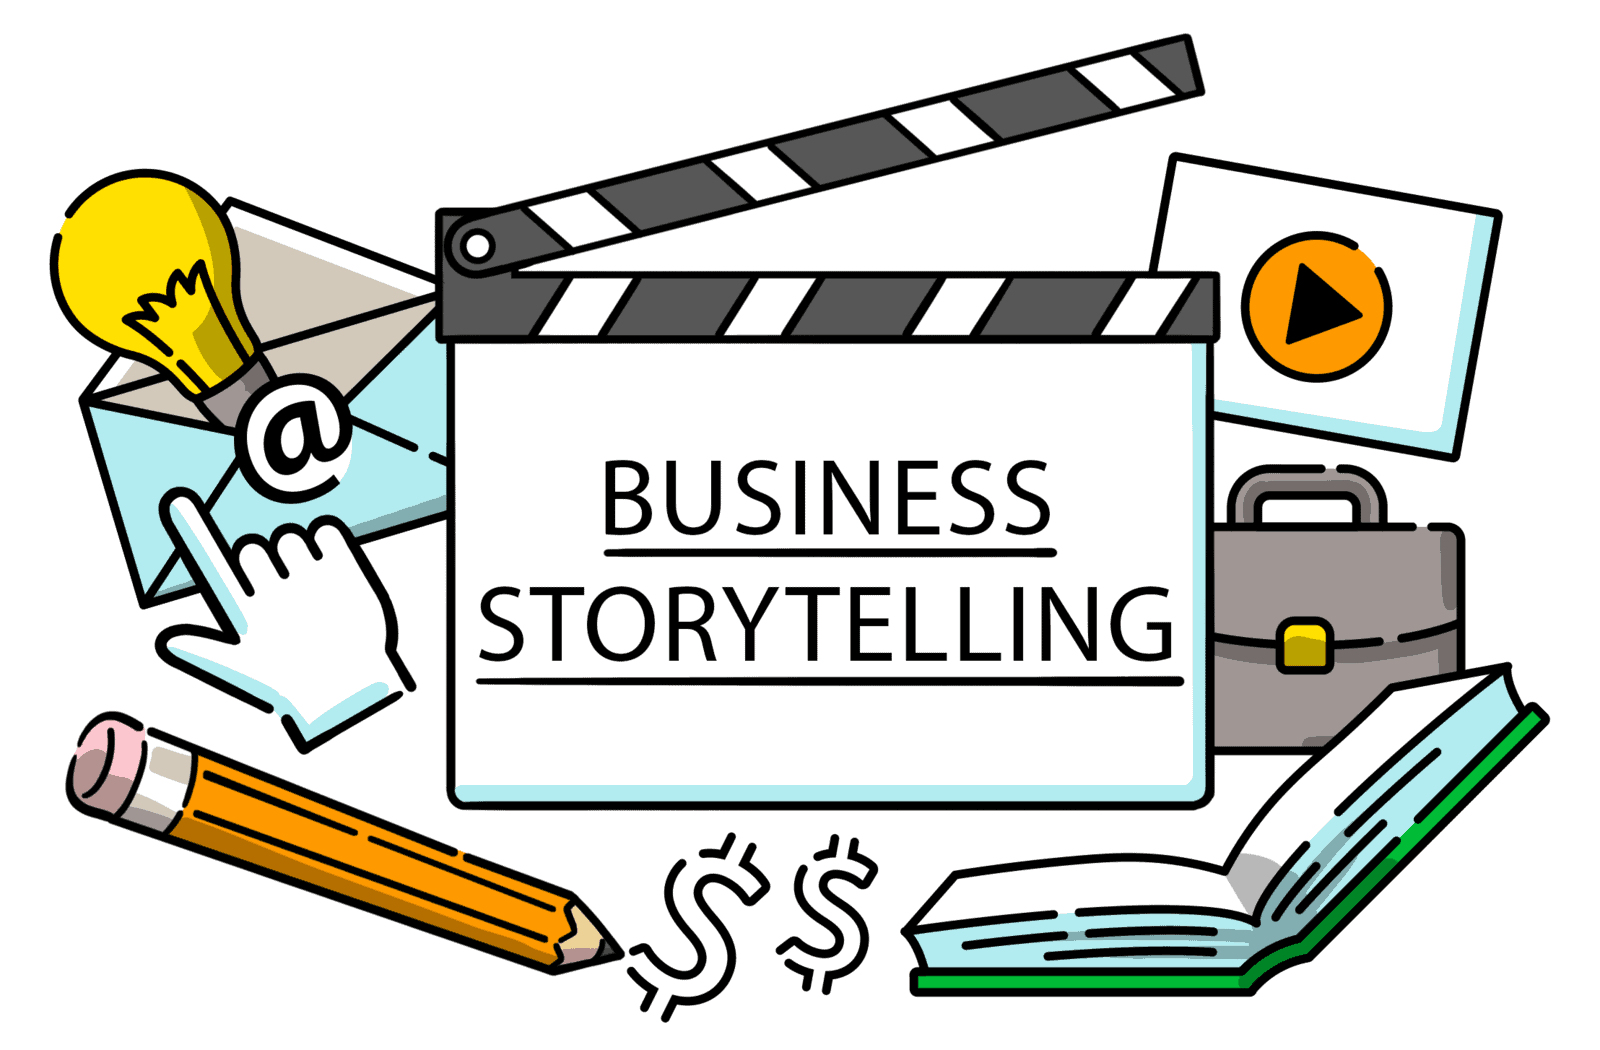 storytelling in business essay